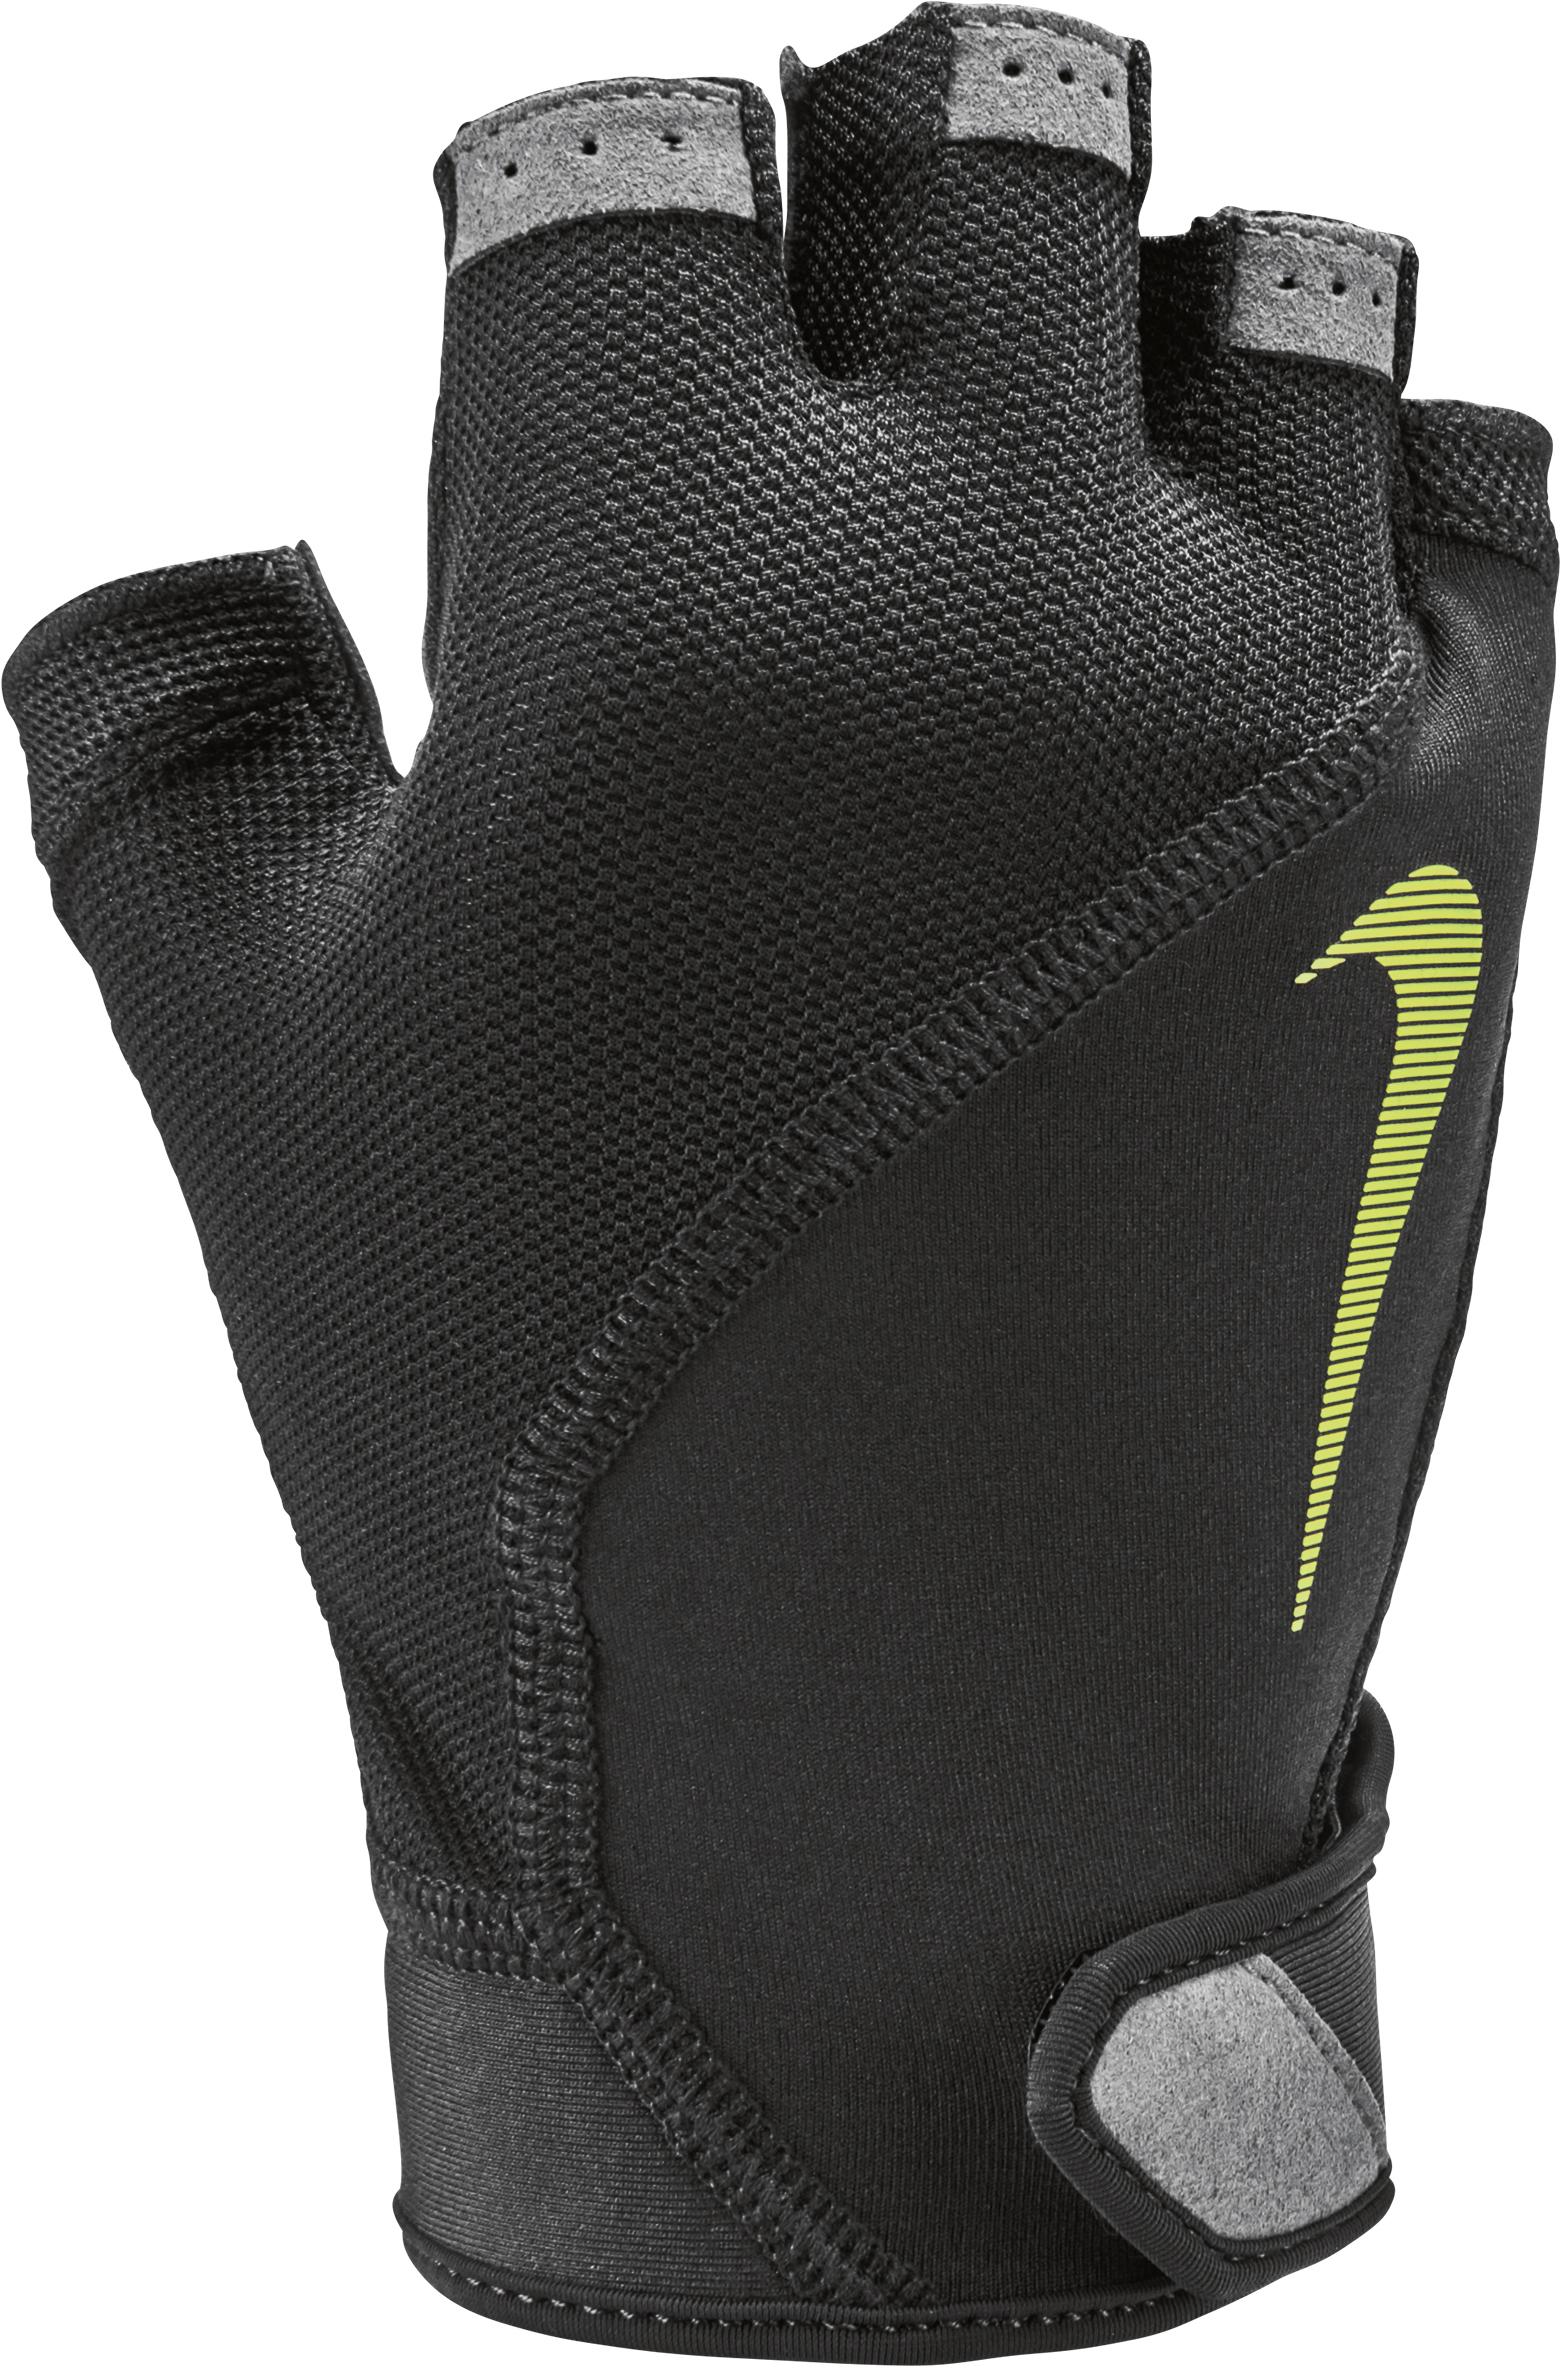 Nike Elemental Fitness Gloves - Black/dark Grey/black/volt